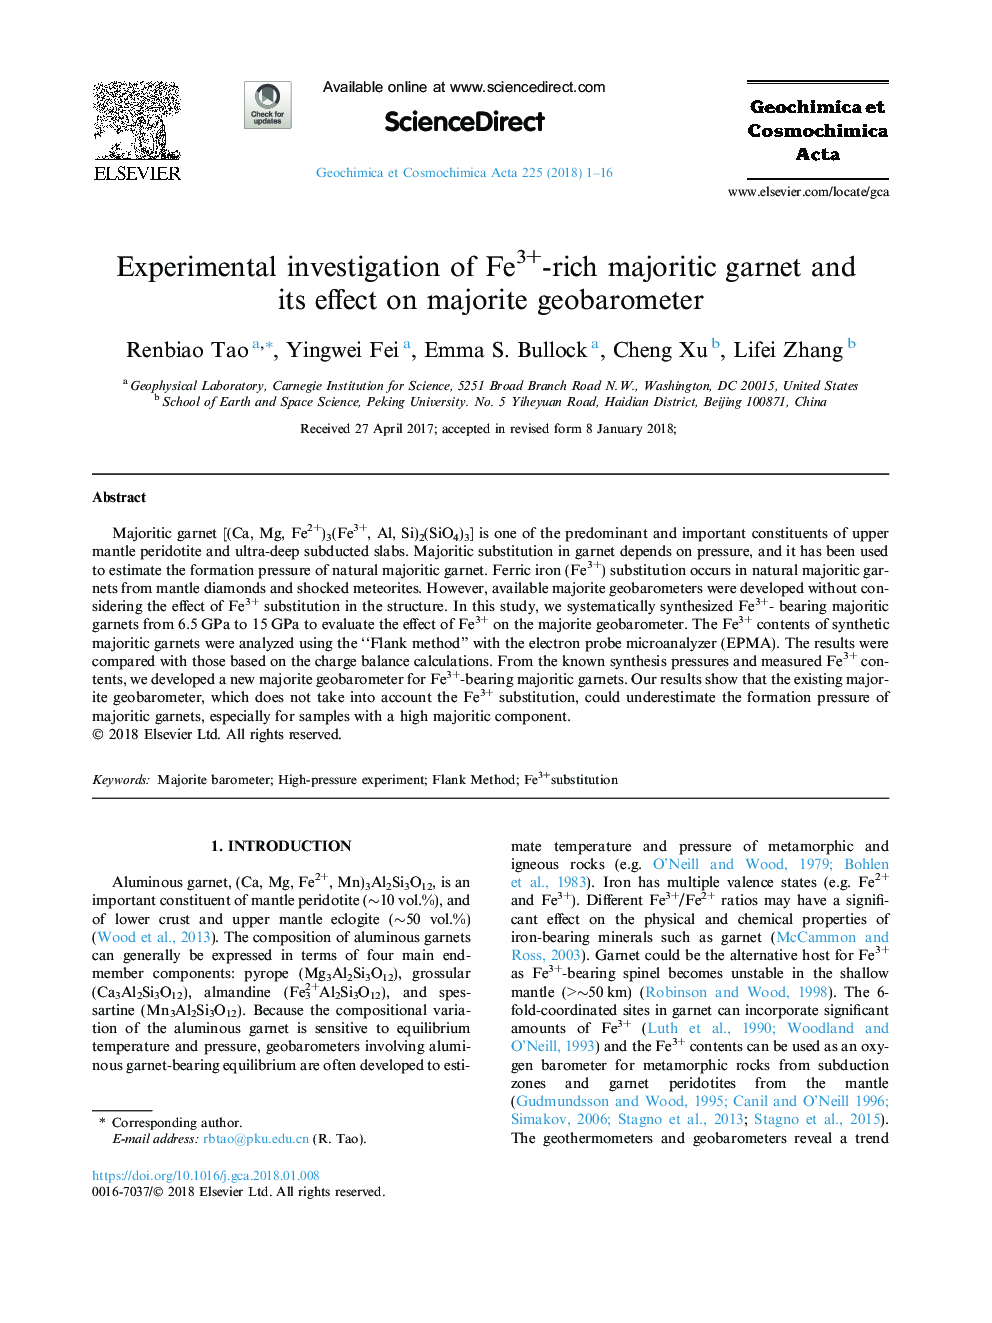 Experimental investigation of Fe3+-rich majoritic garnet and its effect on majorite geobarometer